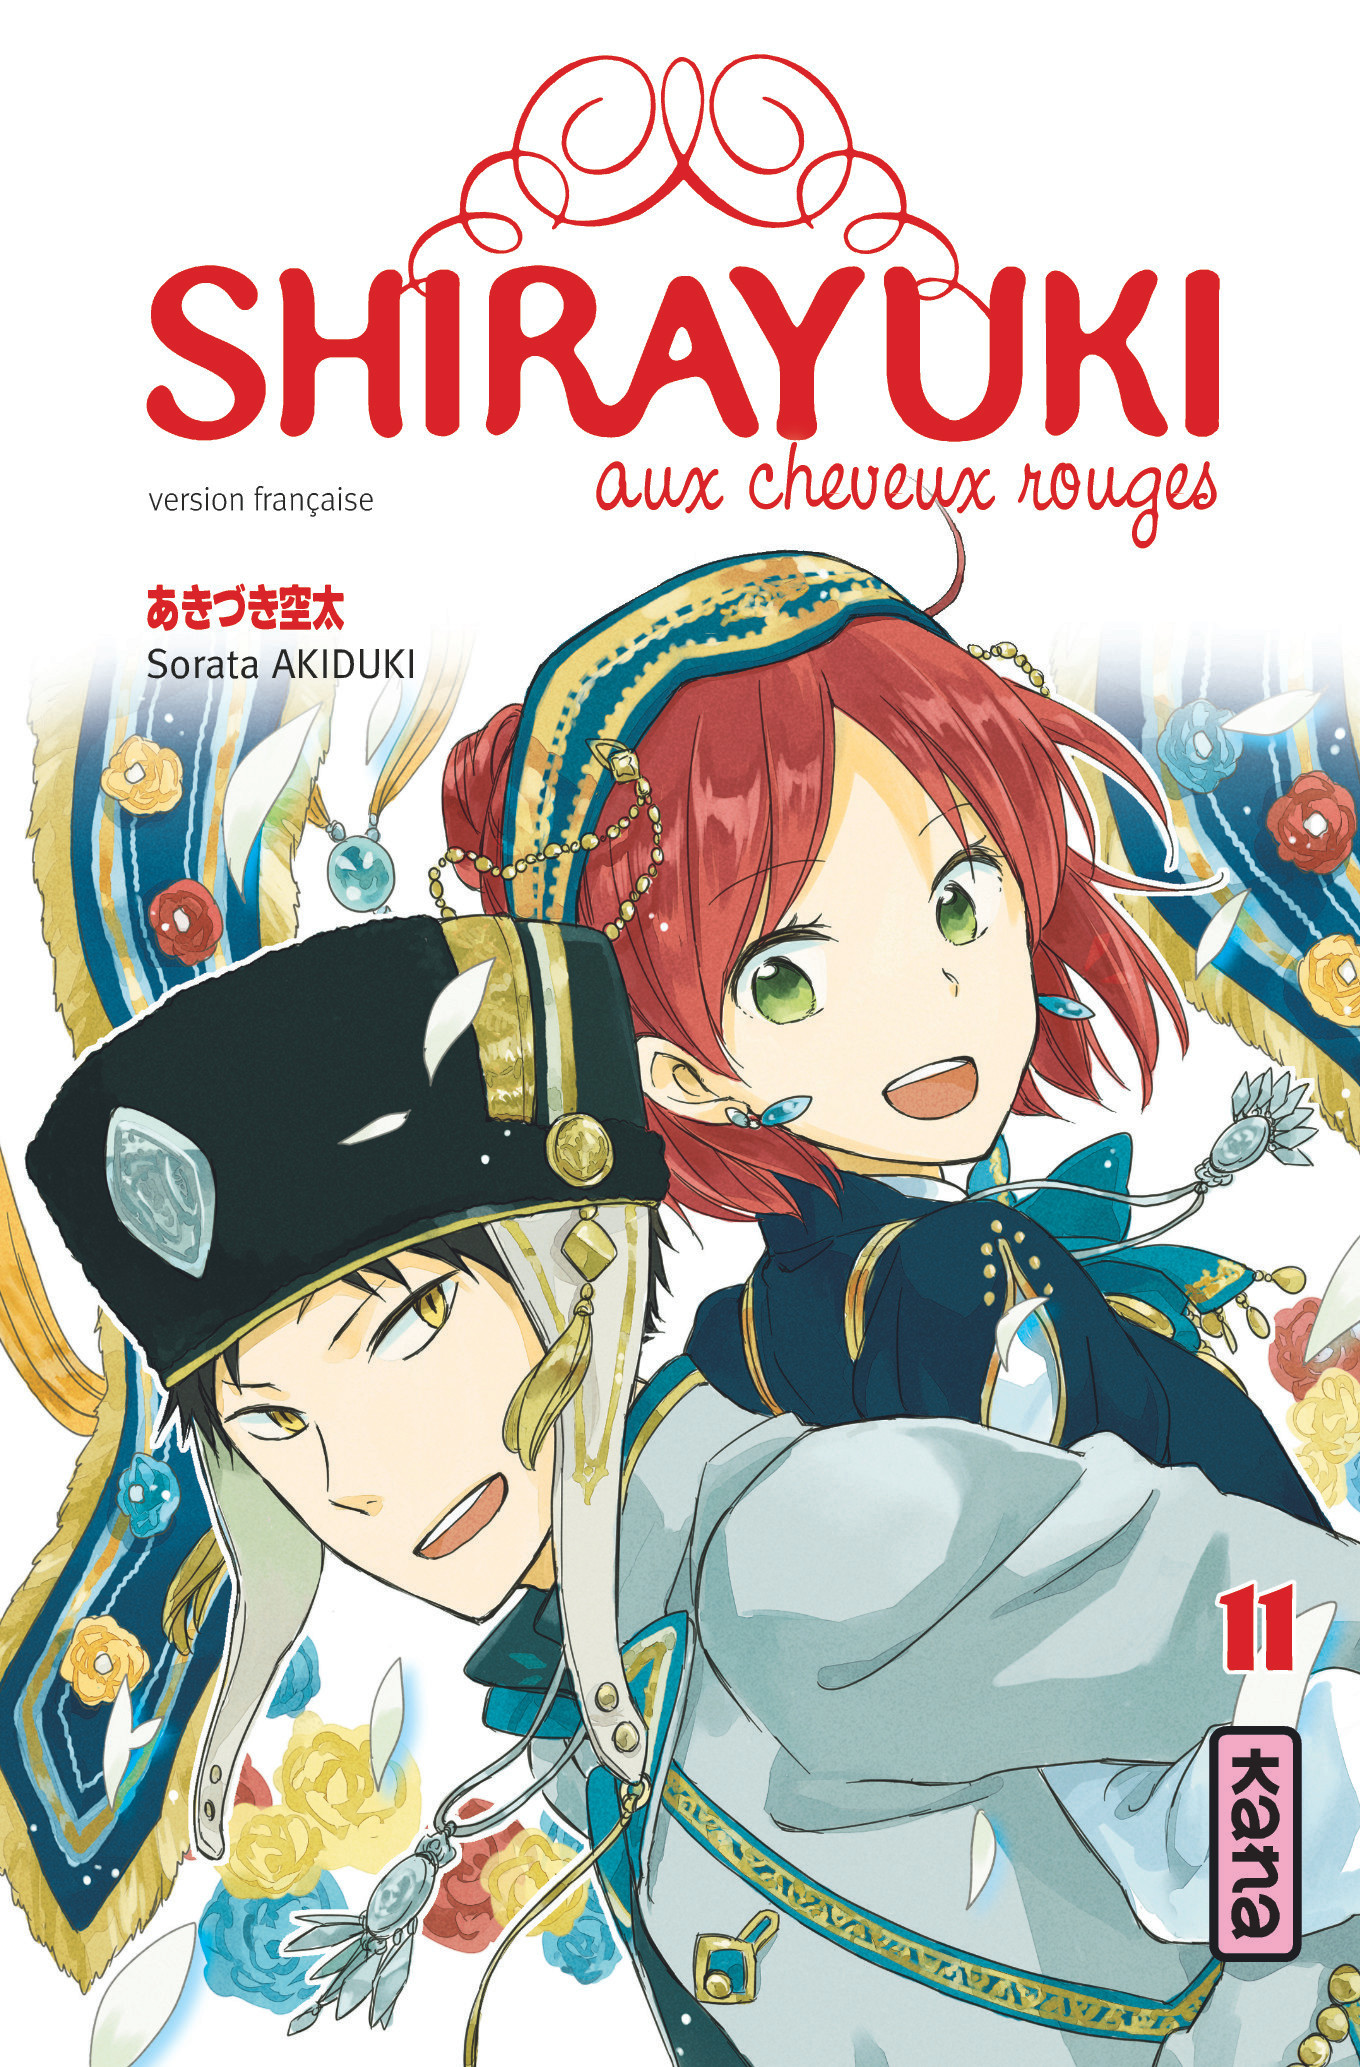 Shirayuki aux cheveux rouges – Tome 11 - couv